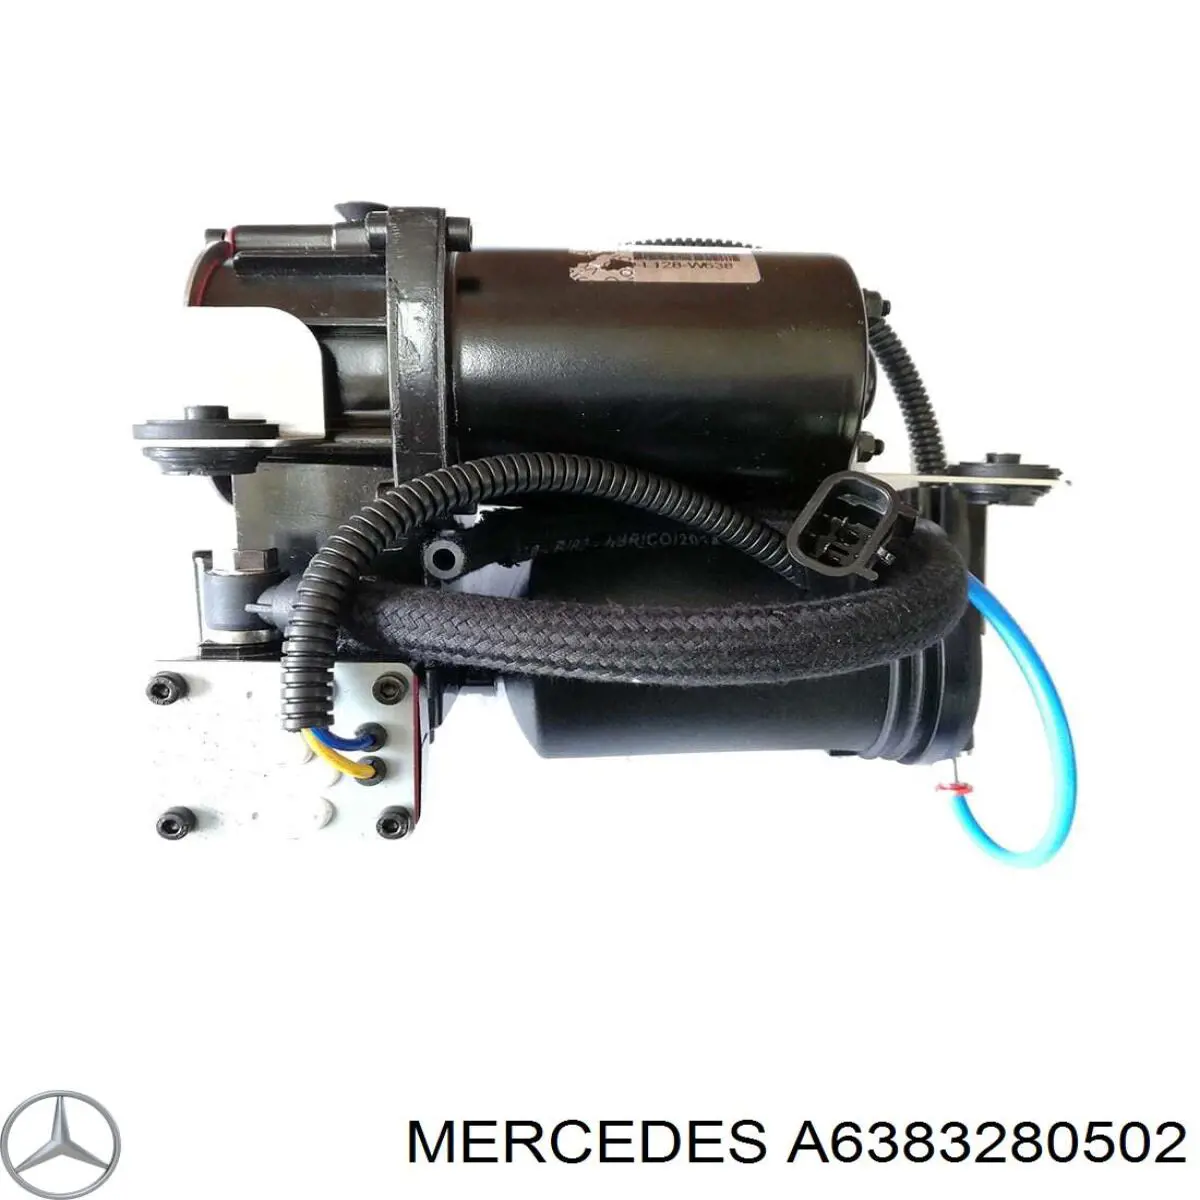 A6383280502 Mercedes компрессор пневмоподкачки (амортизаторов)